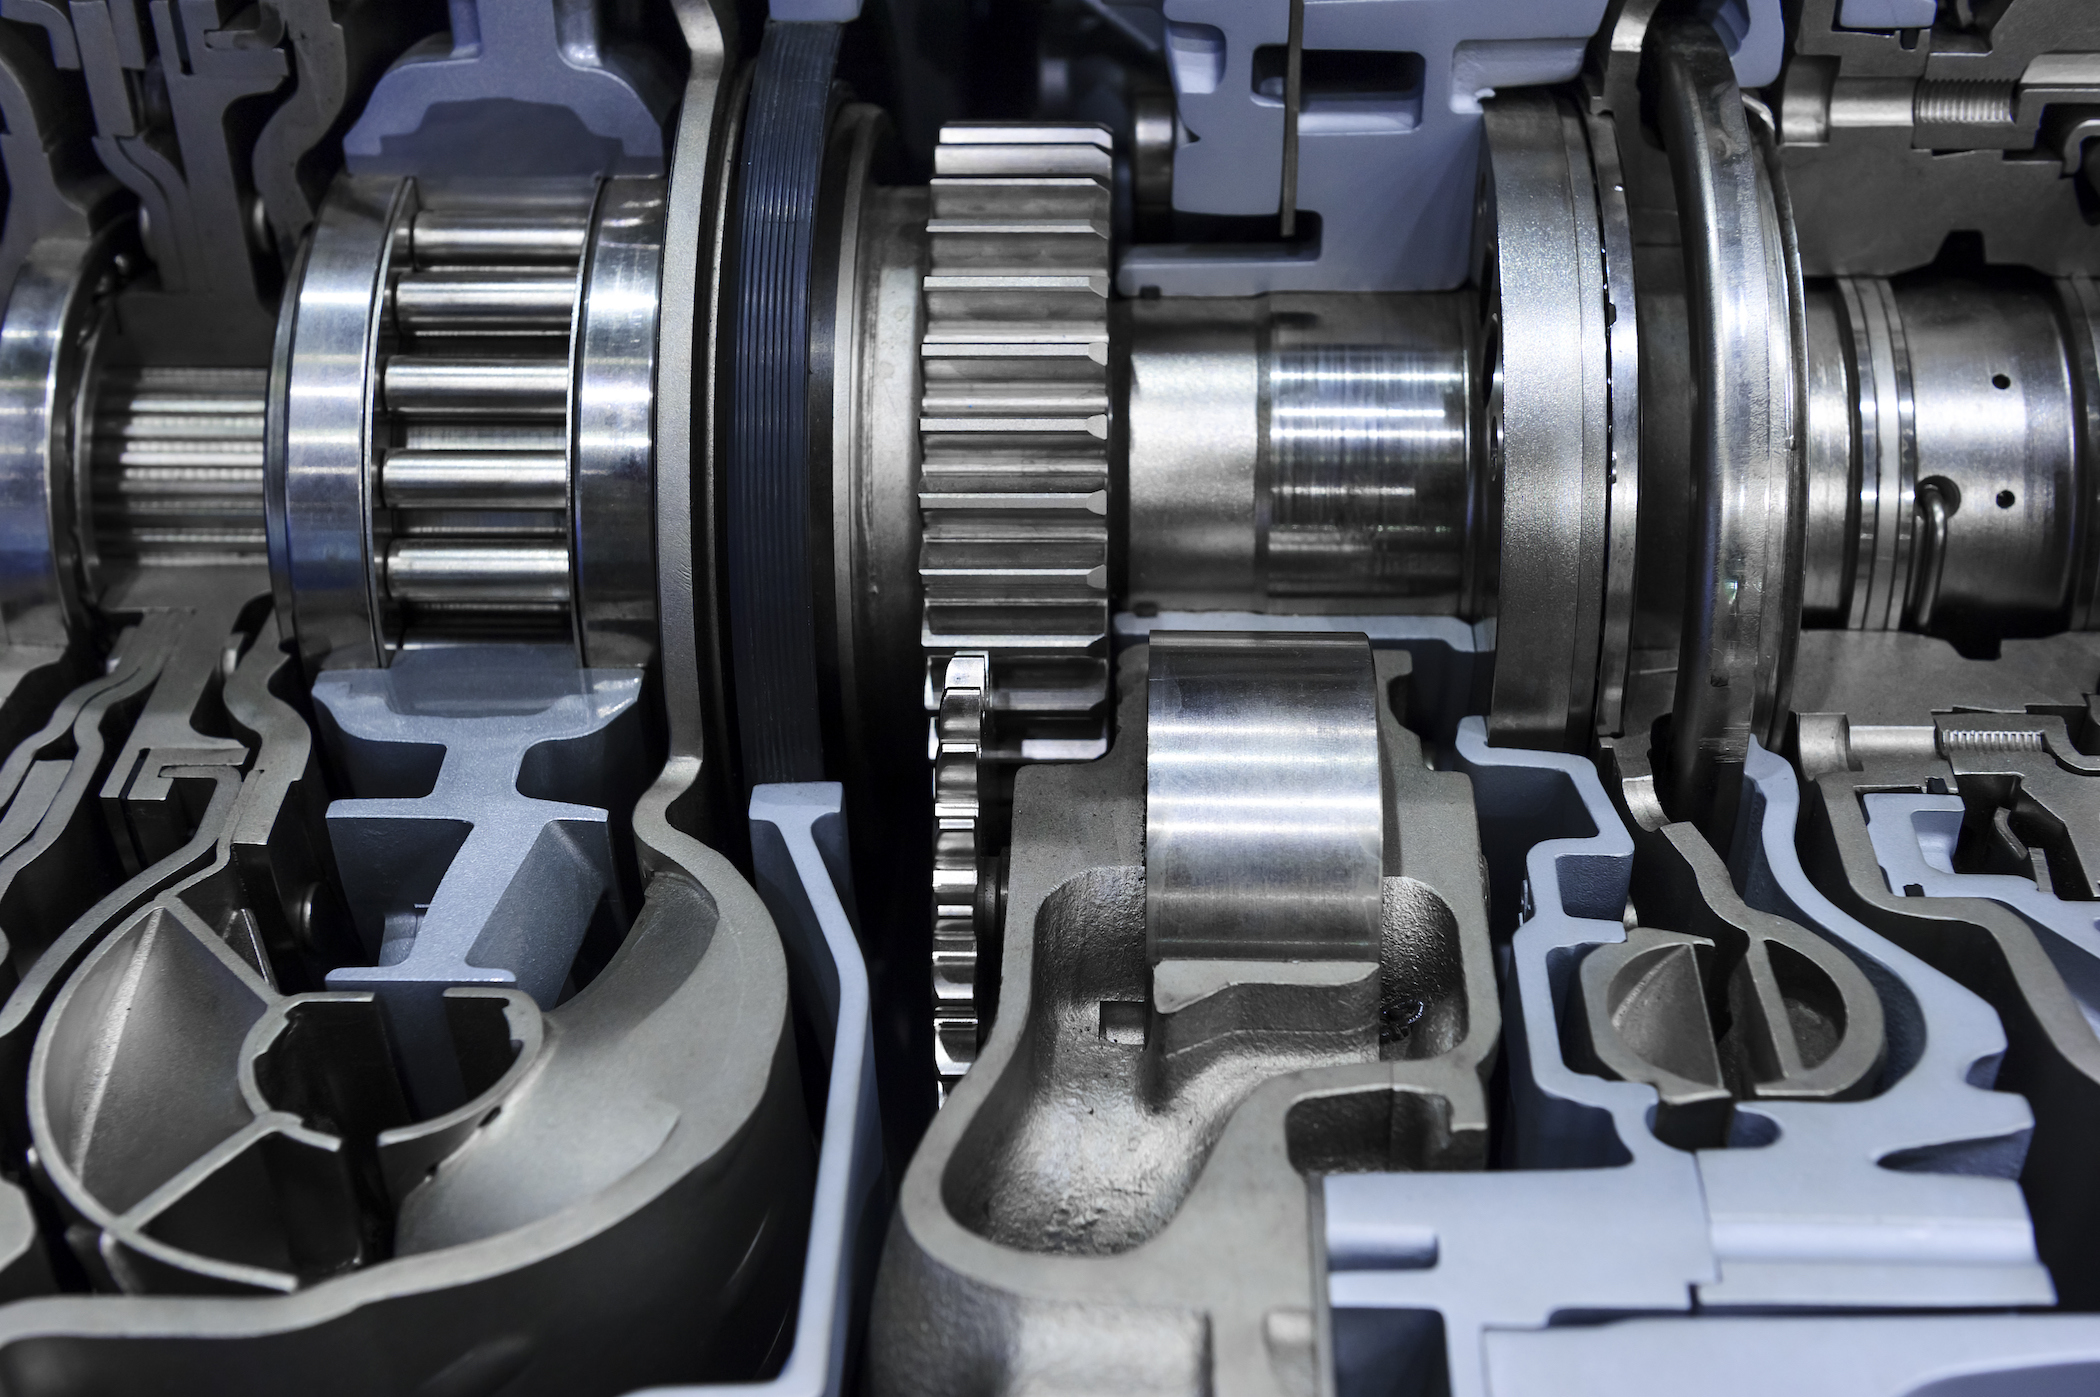 Best Auto Repair Mechanic Diesel Engine Charleston Freedom Transmissions Plus 843-225-2820